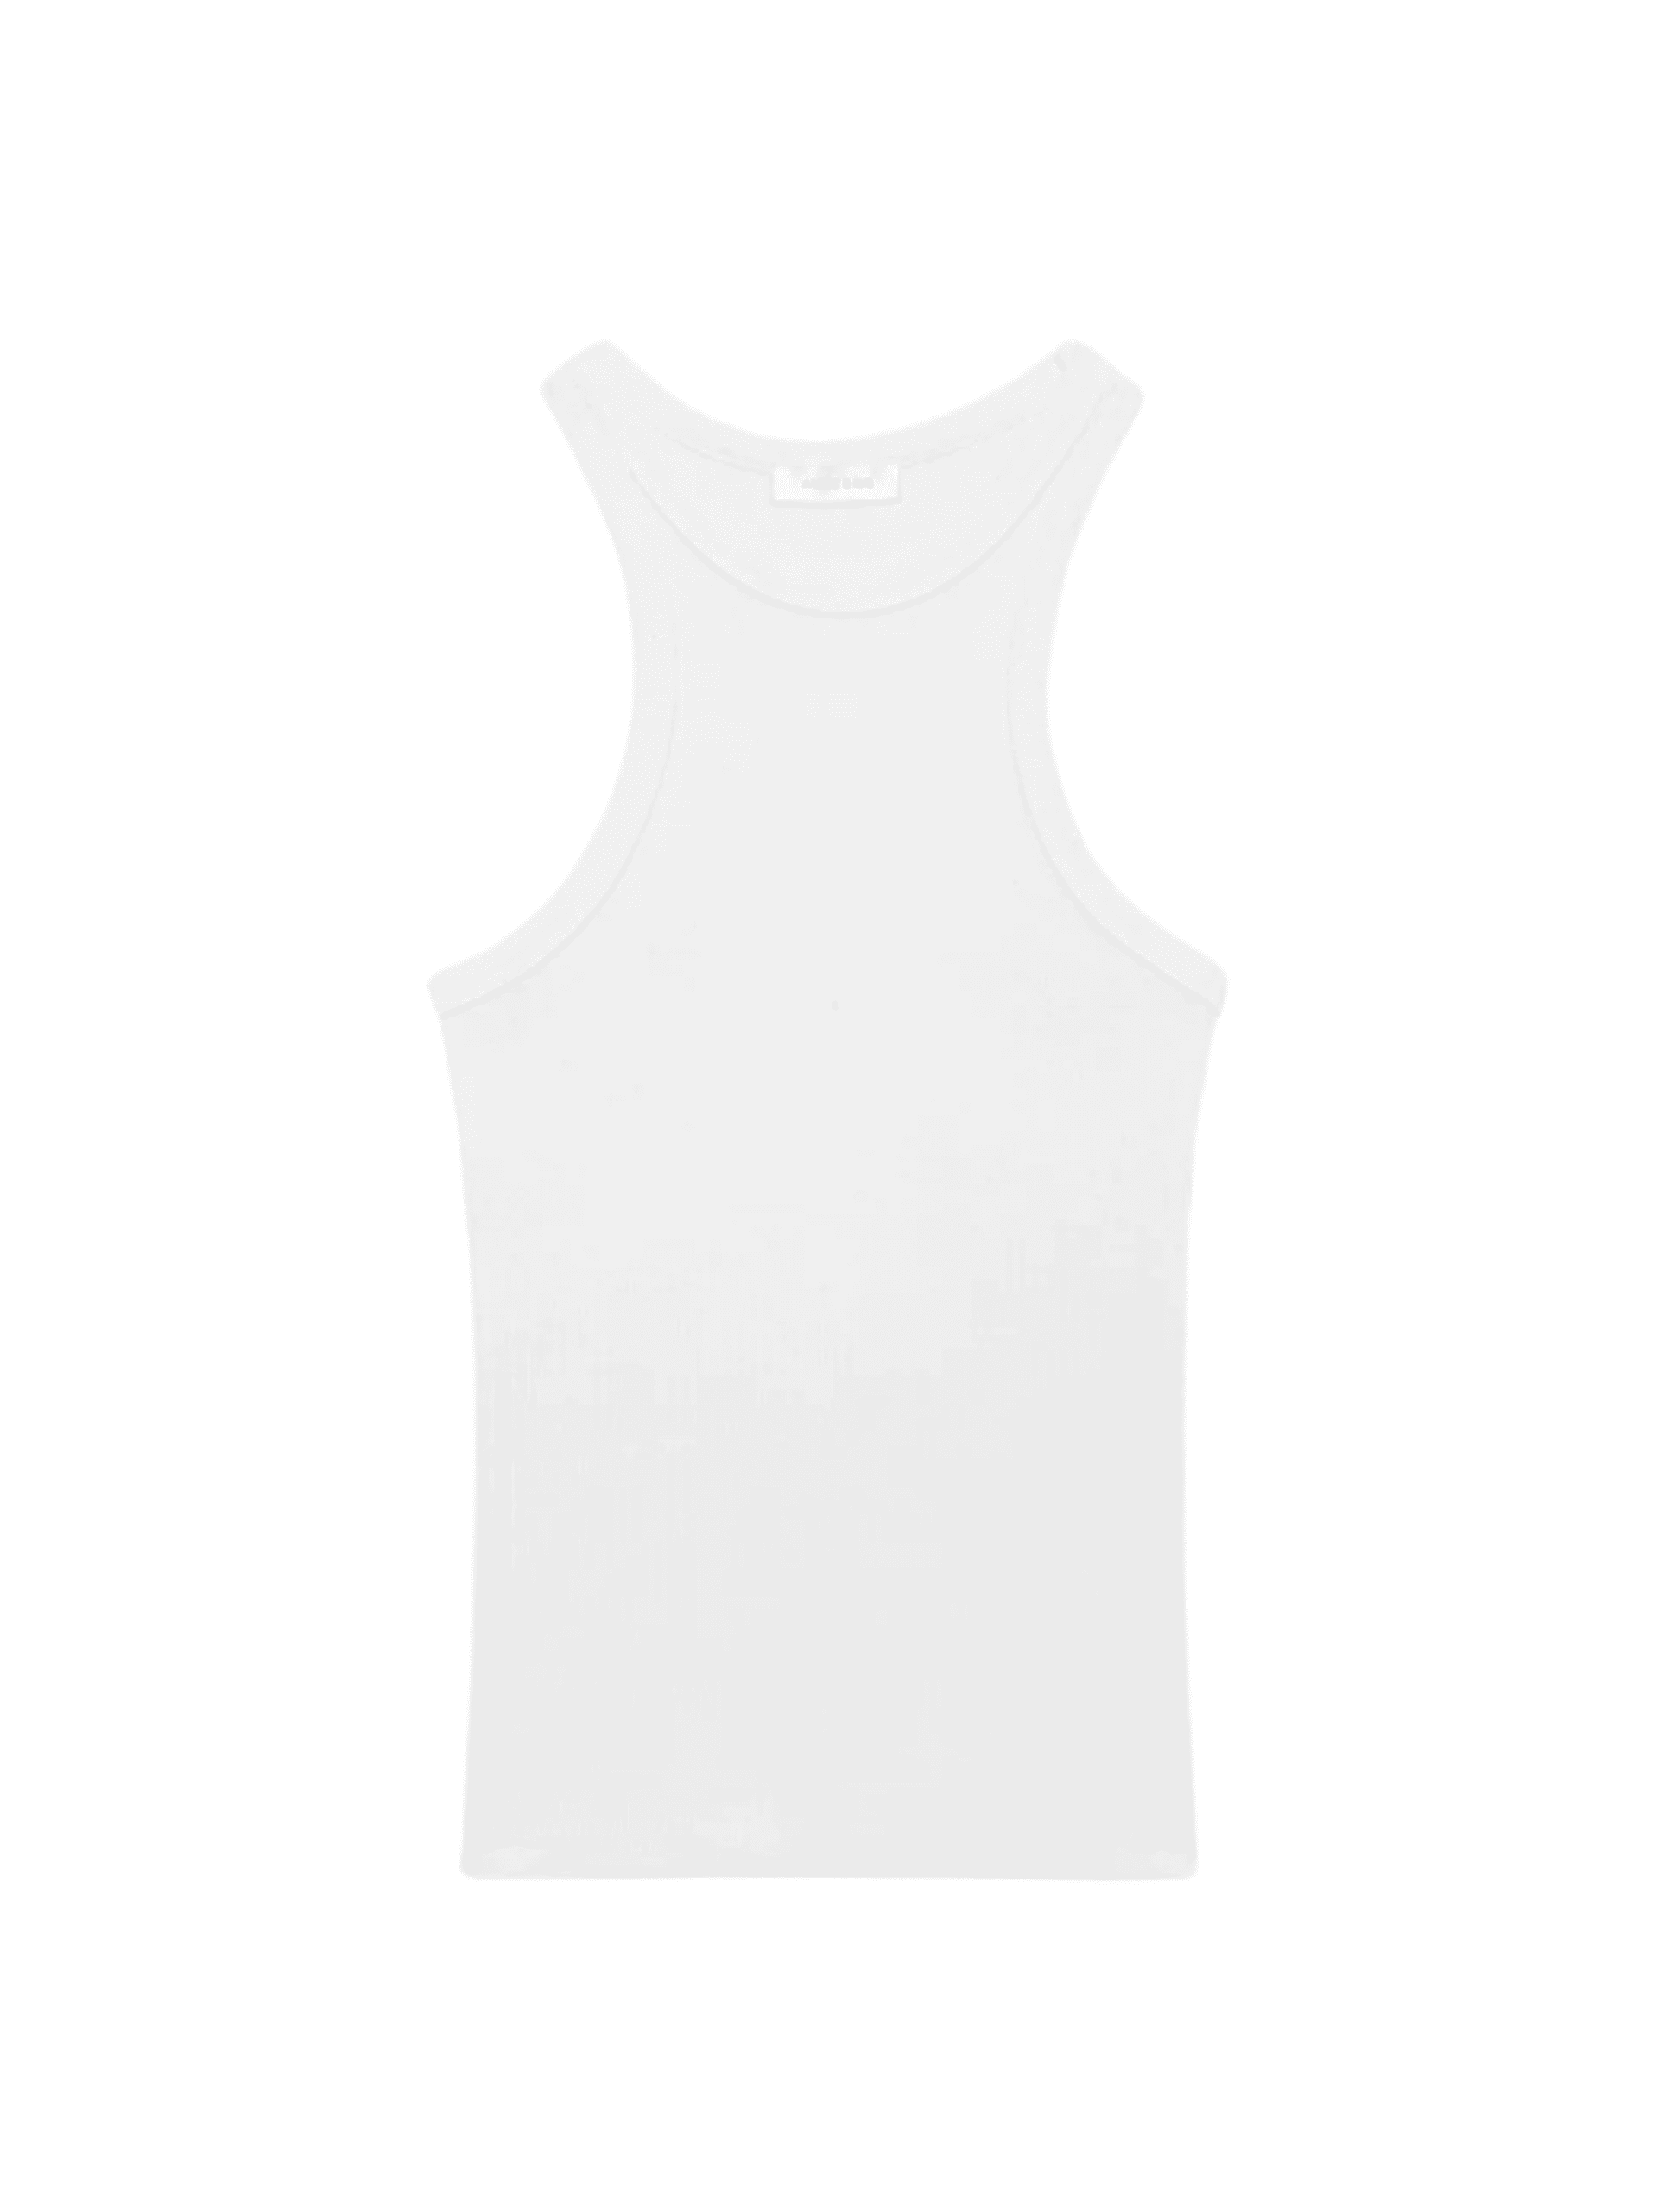 Eva Tank / White - Seletti Concept Store